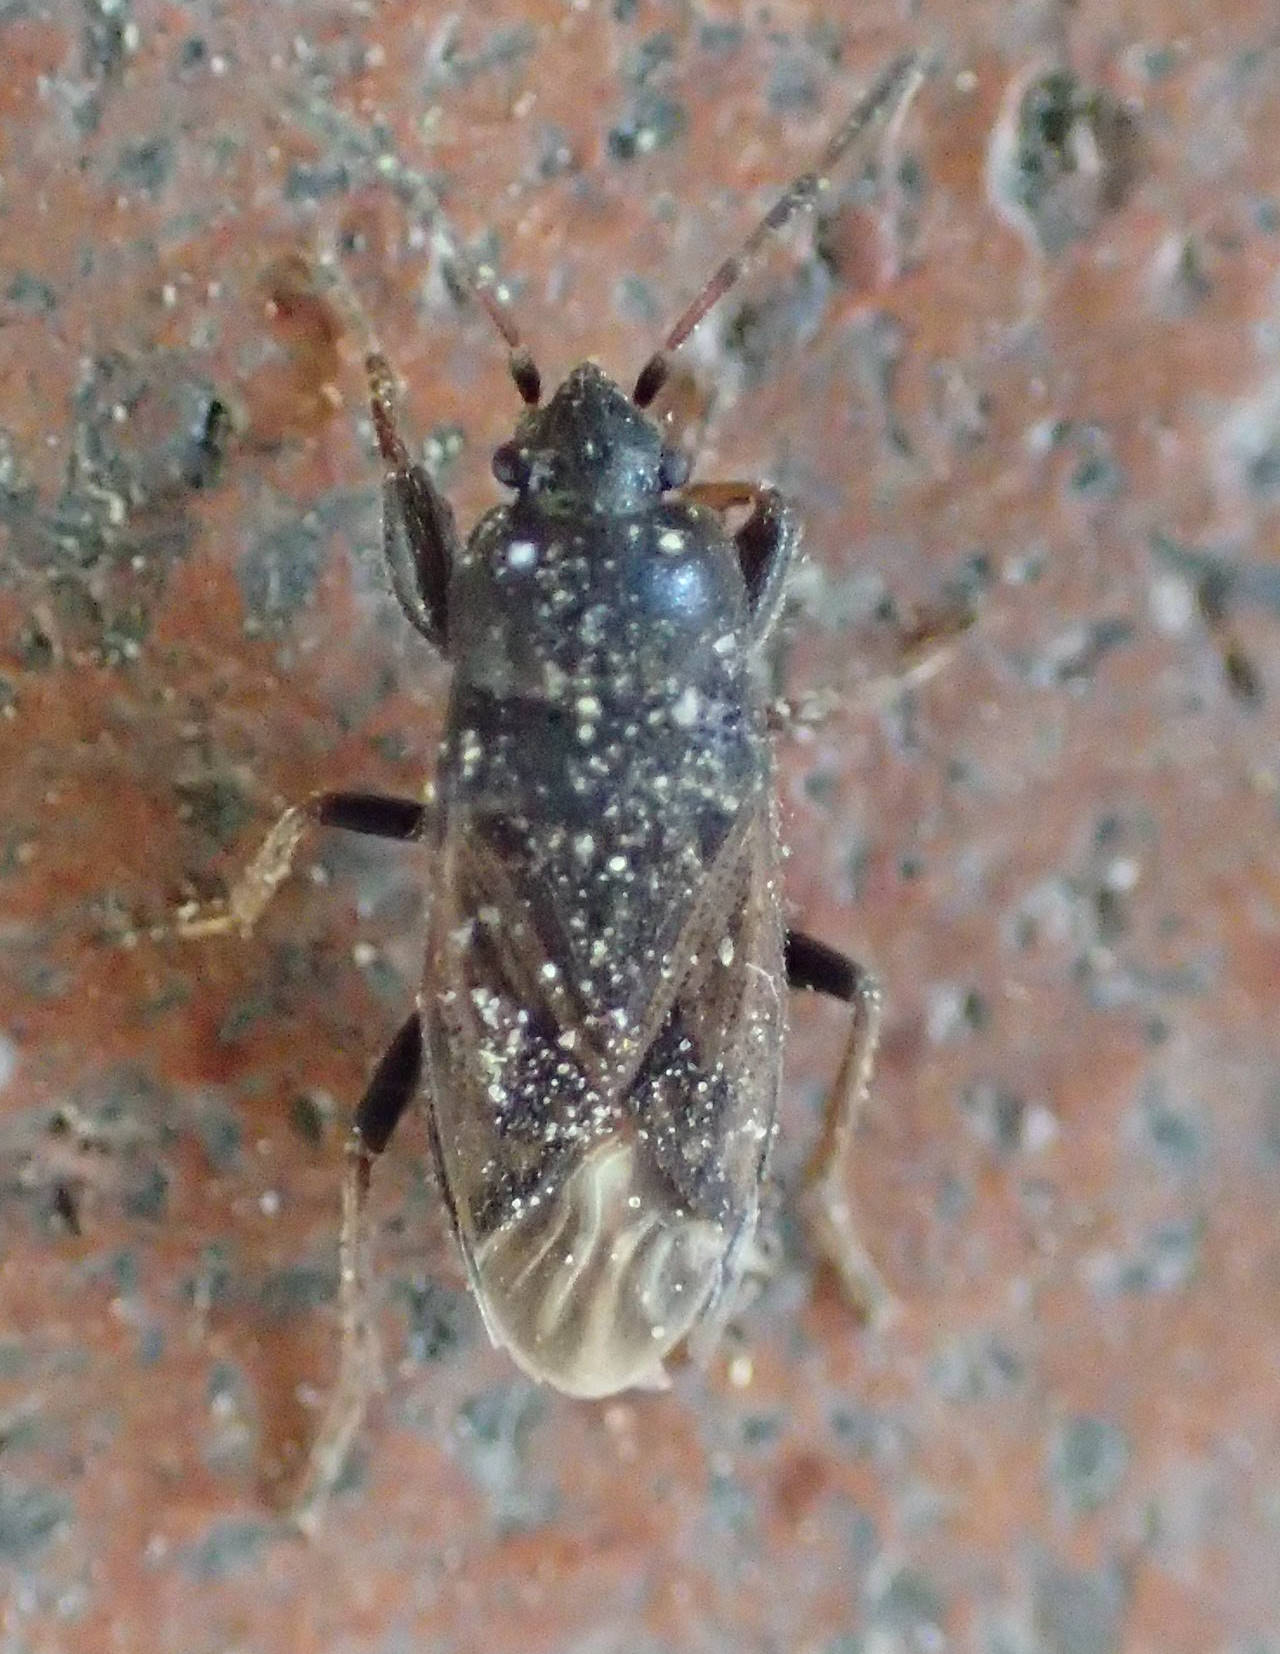 Lygaeidae: Megalonotus sabulicola